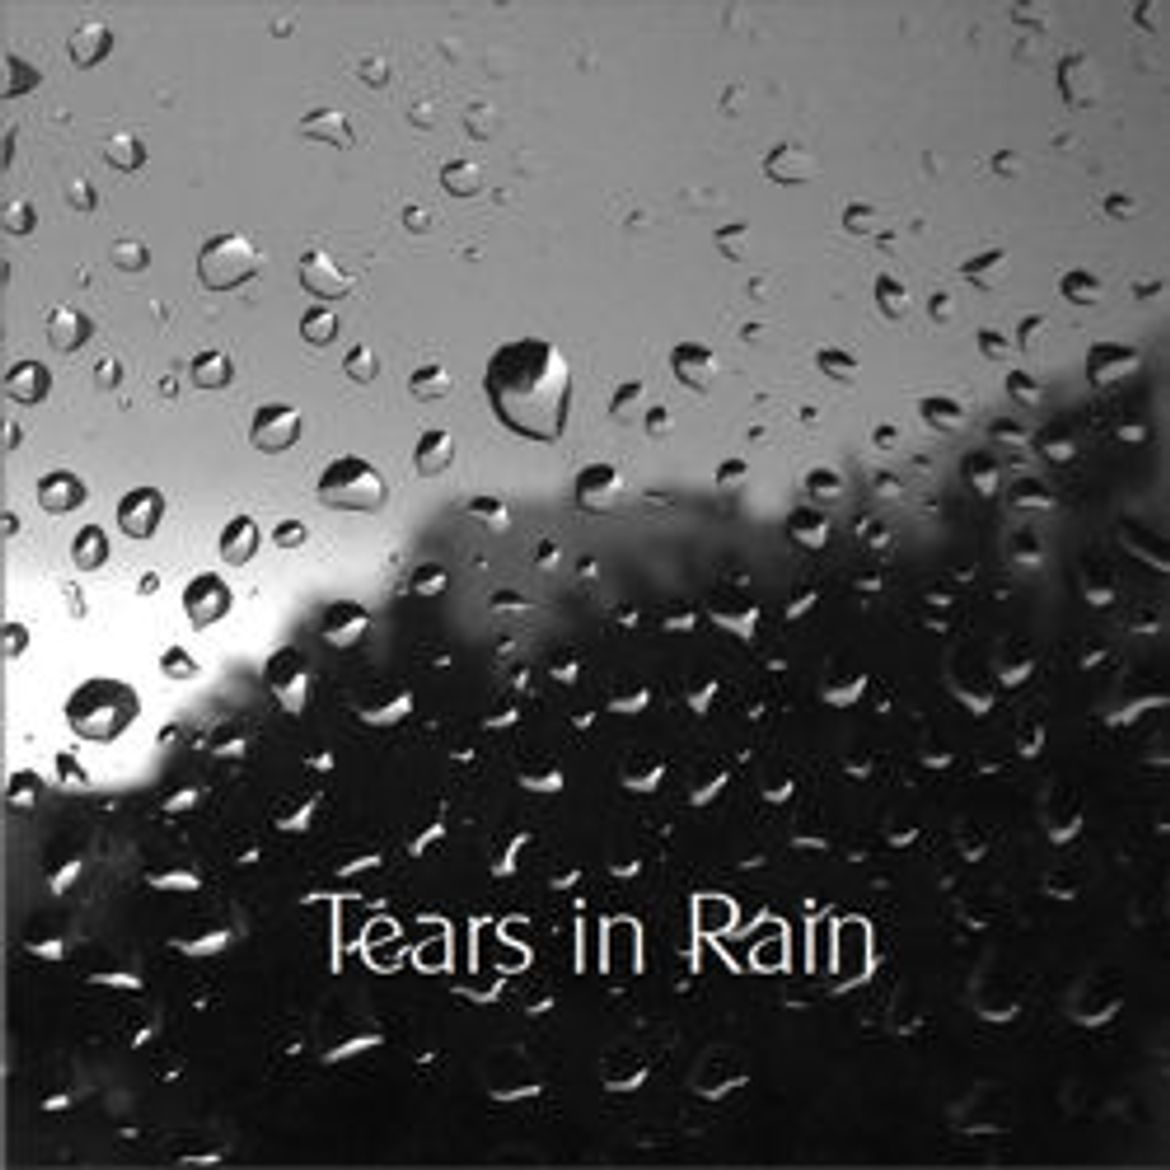 Tears in the rain